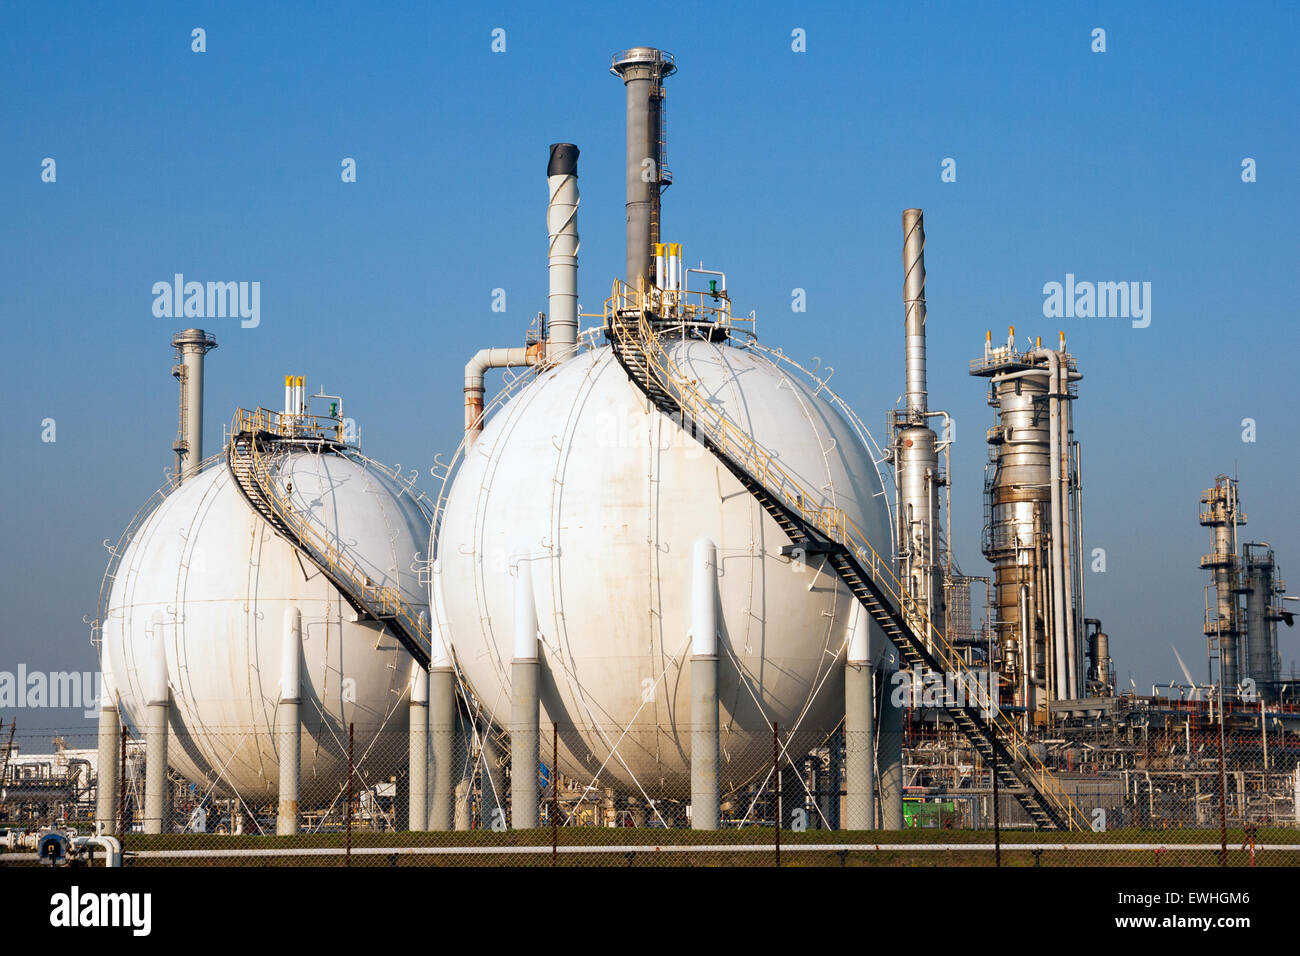 Spherical gas tank farm in a petroleum refinery. Stock Photo